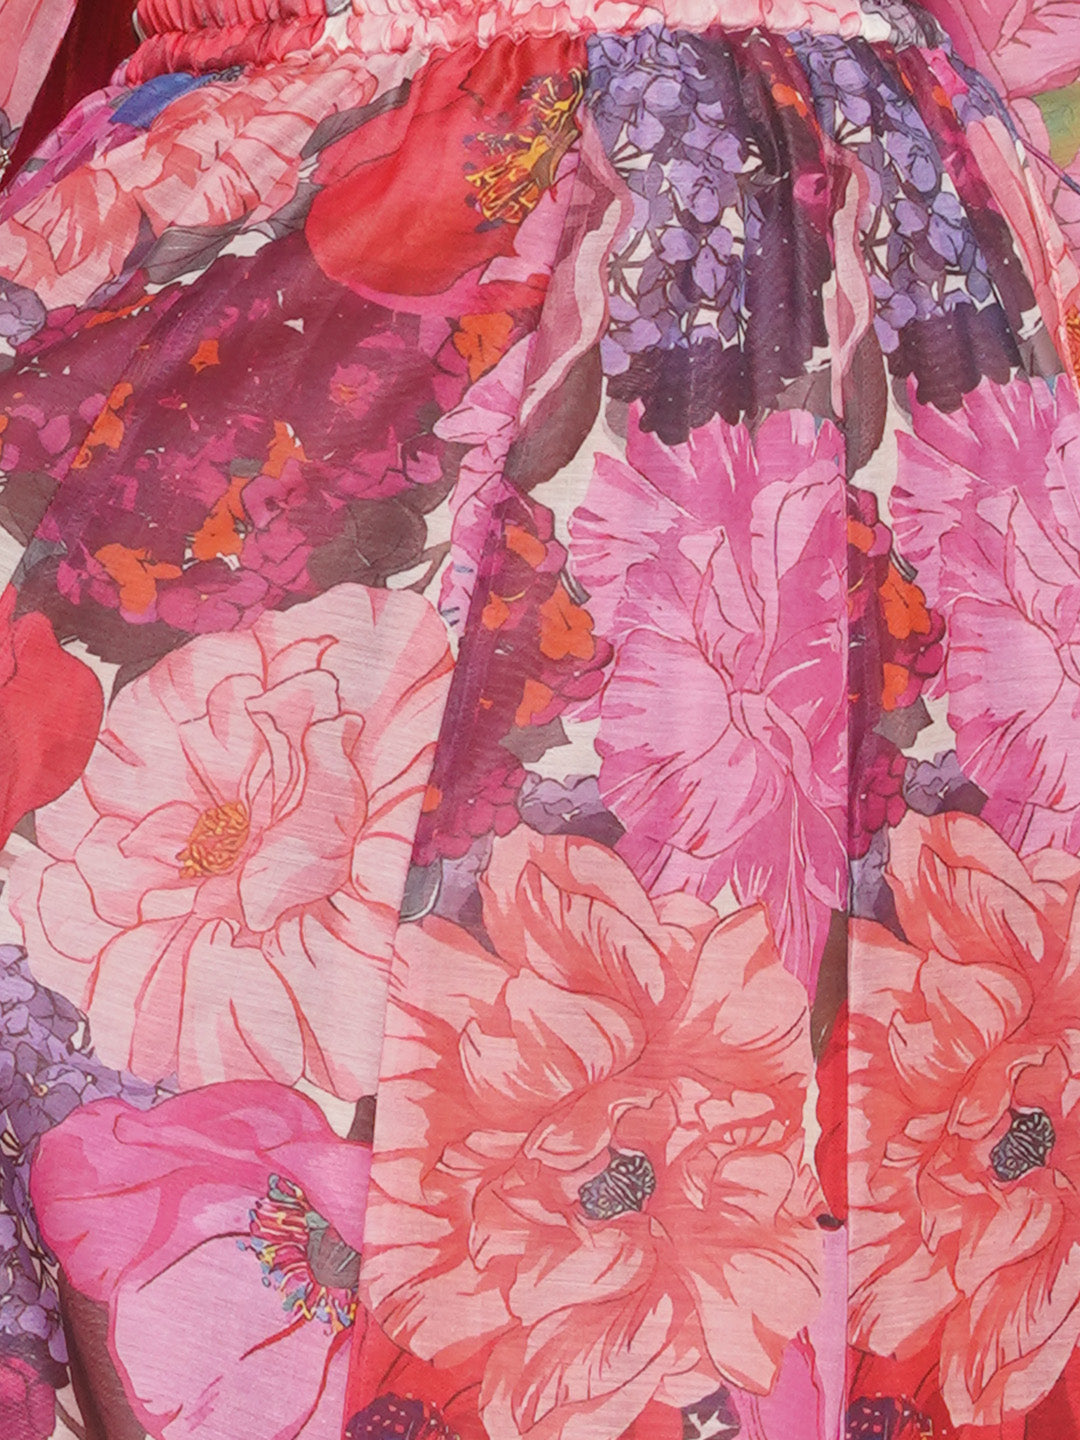 Girls Purple & Pink Digital Flower Print Lace work Choli Lehenga with Dupatta